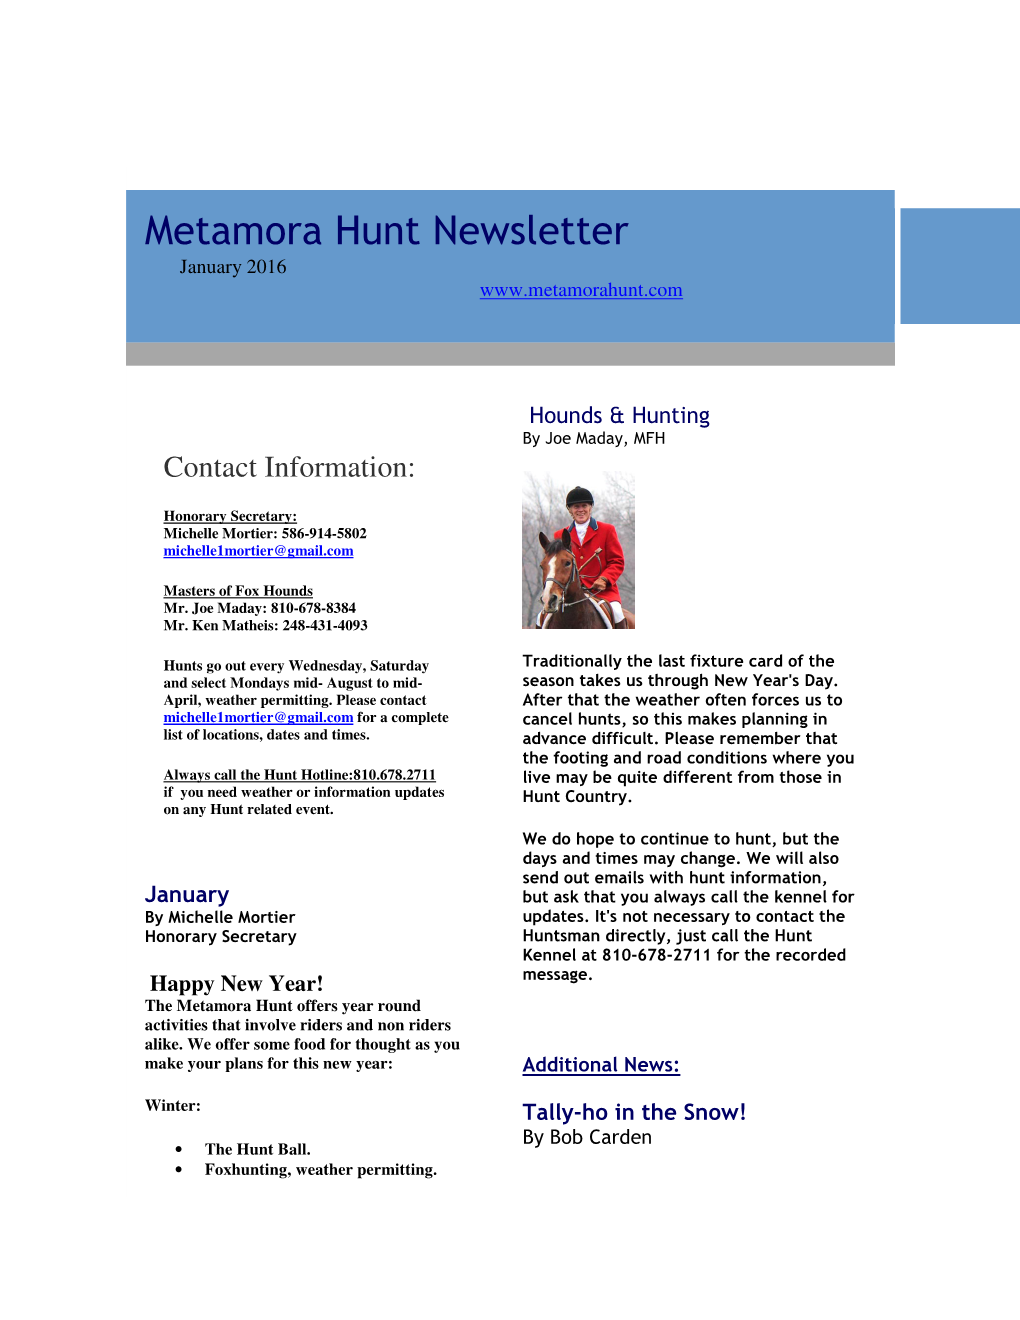 Metamora Hunt Newsletter January 2016